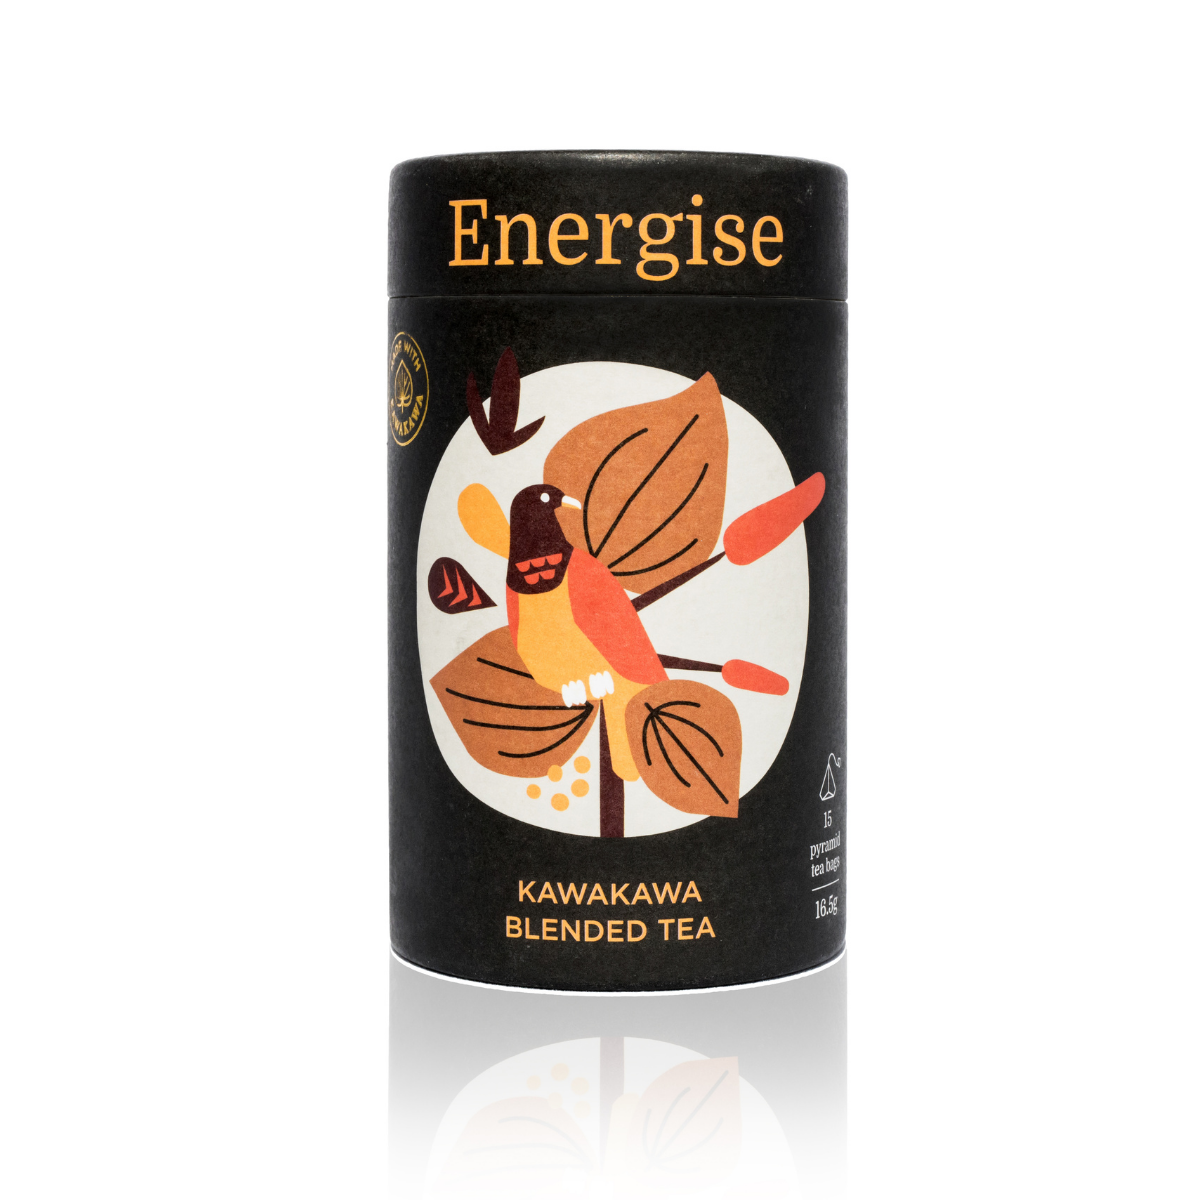 OKU Kawakawa Energise Tea